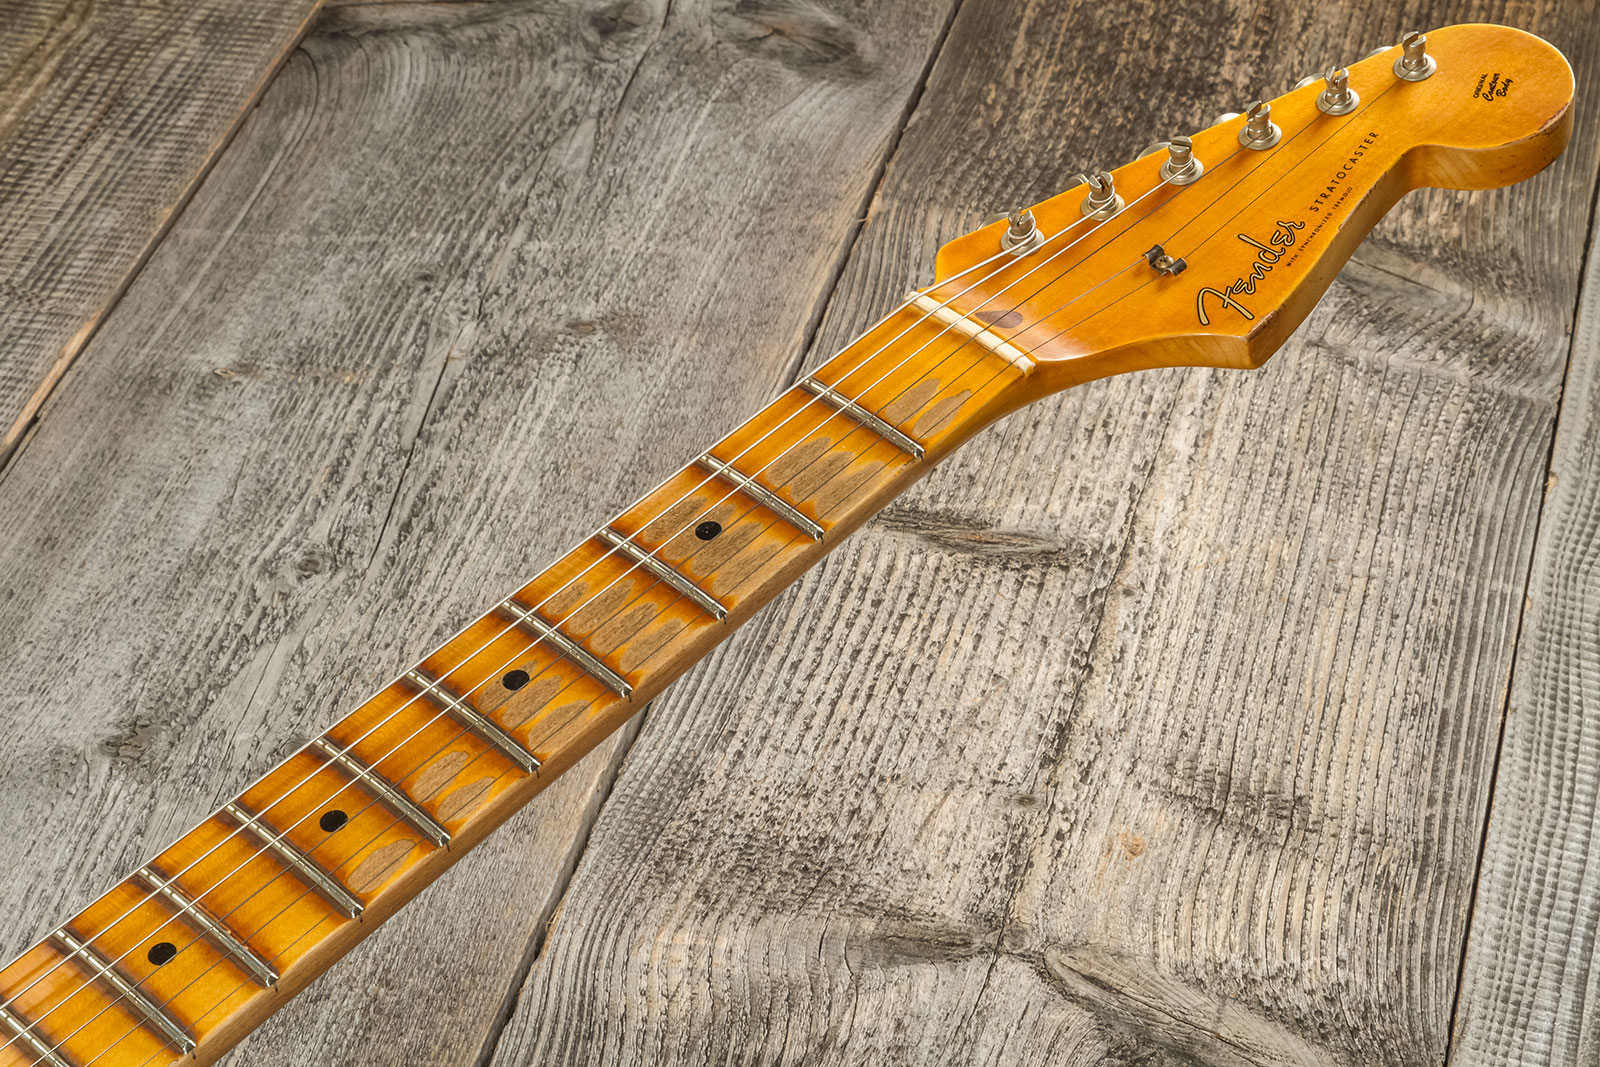 Fender Custom Shop Strat Fat 50's 3s Trem Mn #cz570495 - Relic India Ivory - E-Gitarre in Str-Form - Variation 7